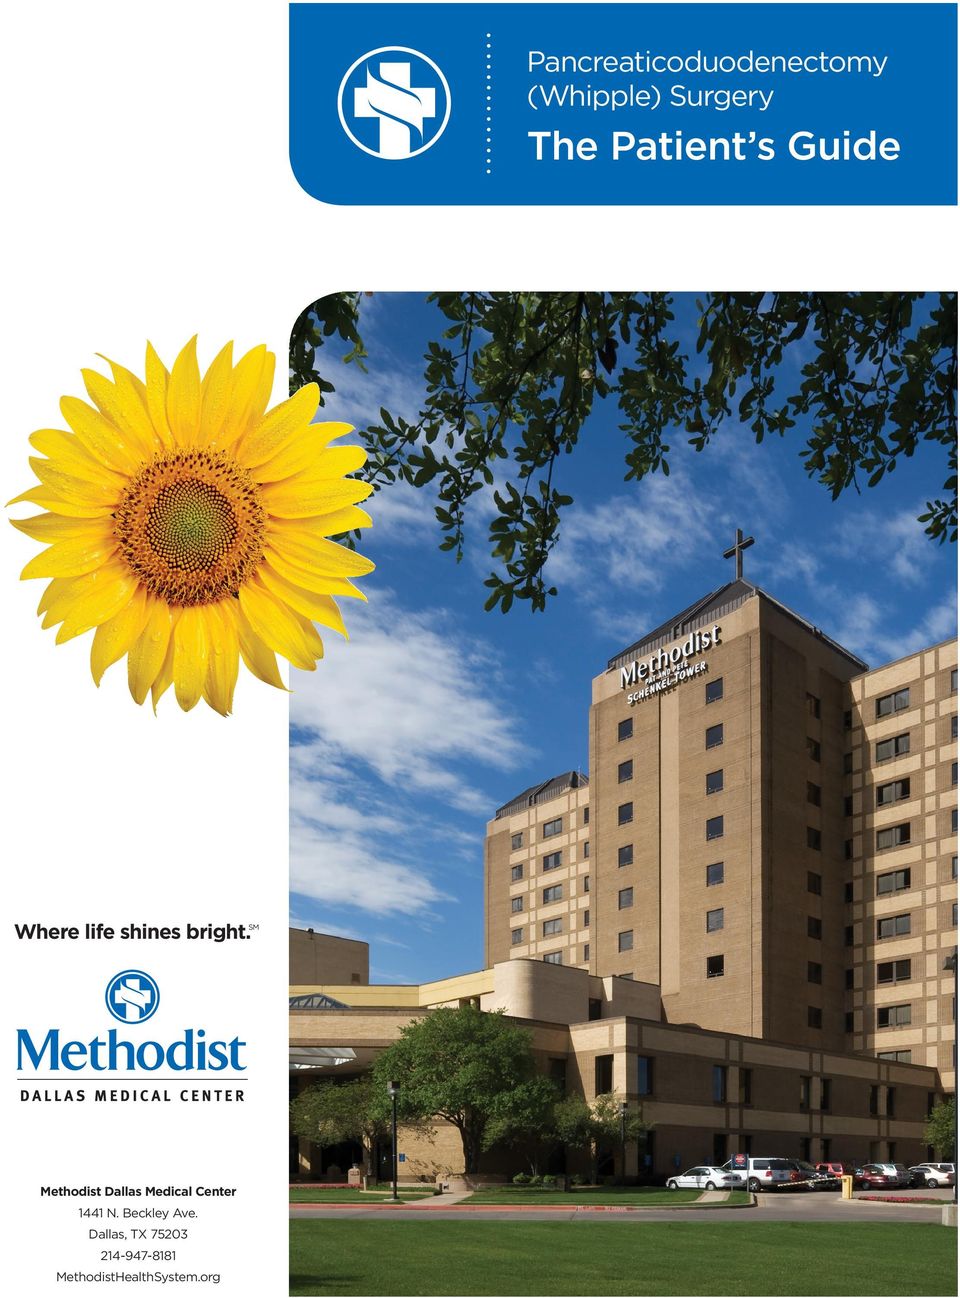 SM Methodist Dallas Medical Center 1441 N.